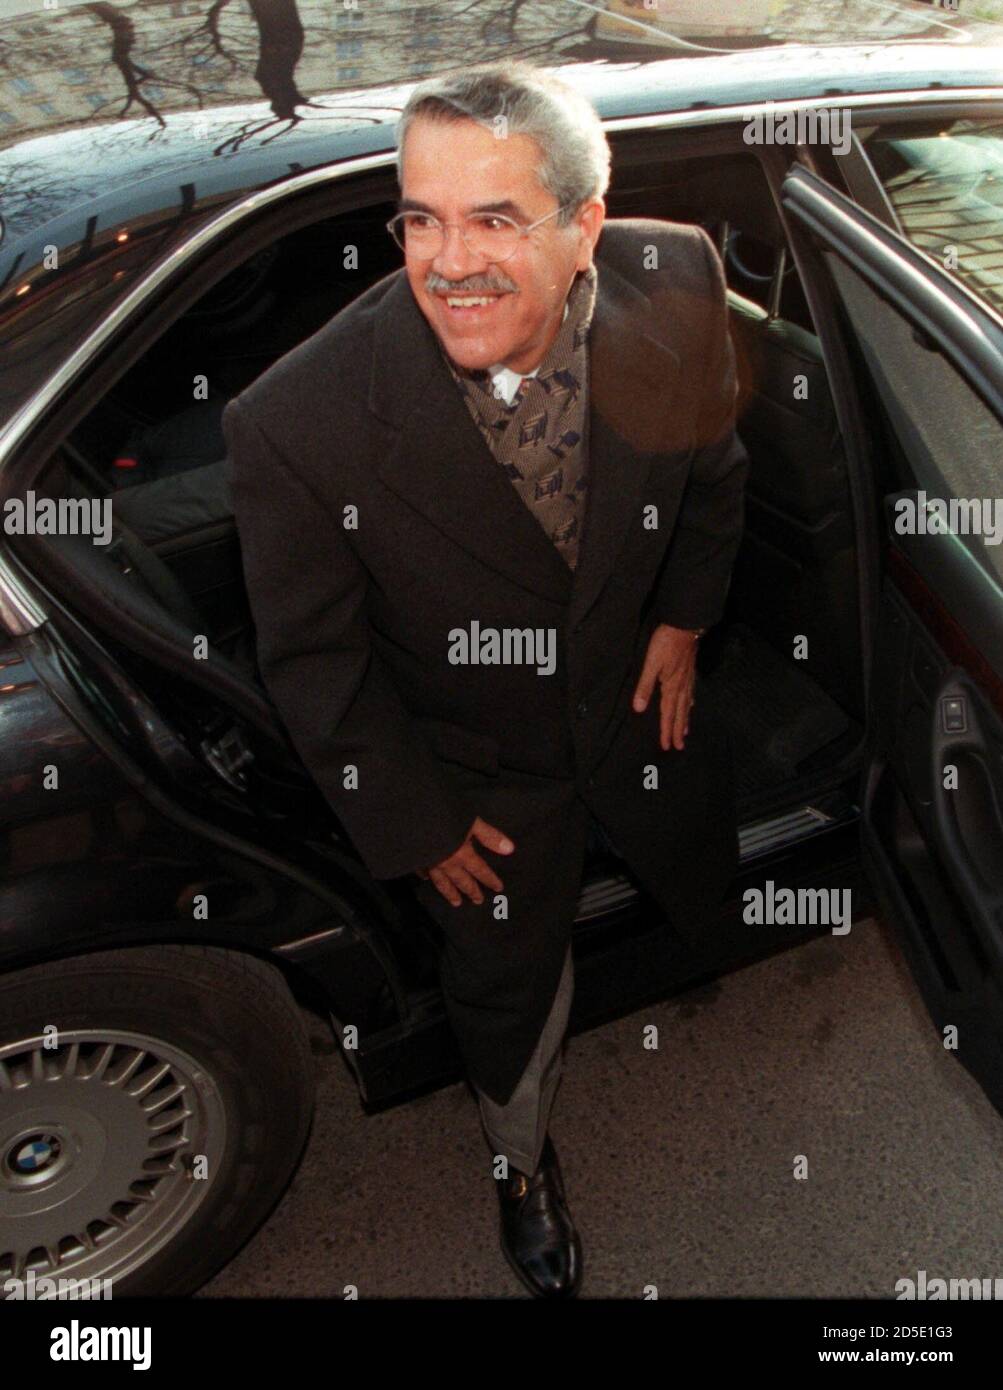 Photo of Ali Al-Naimi  - car
